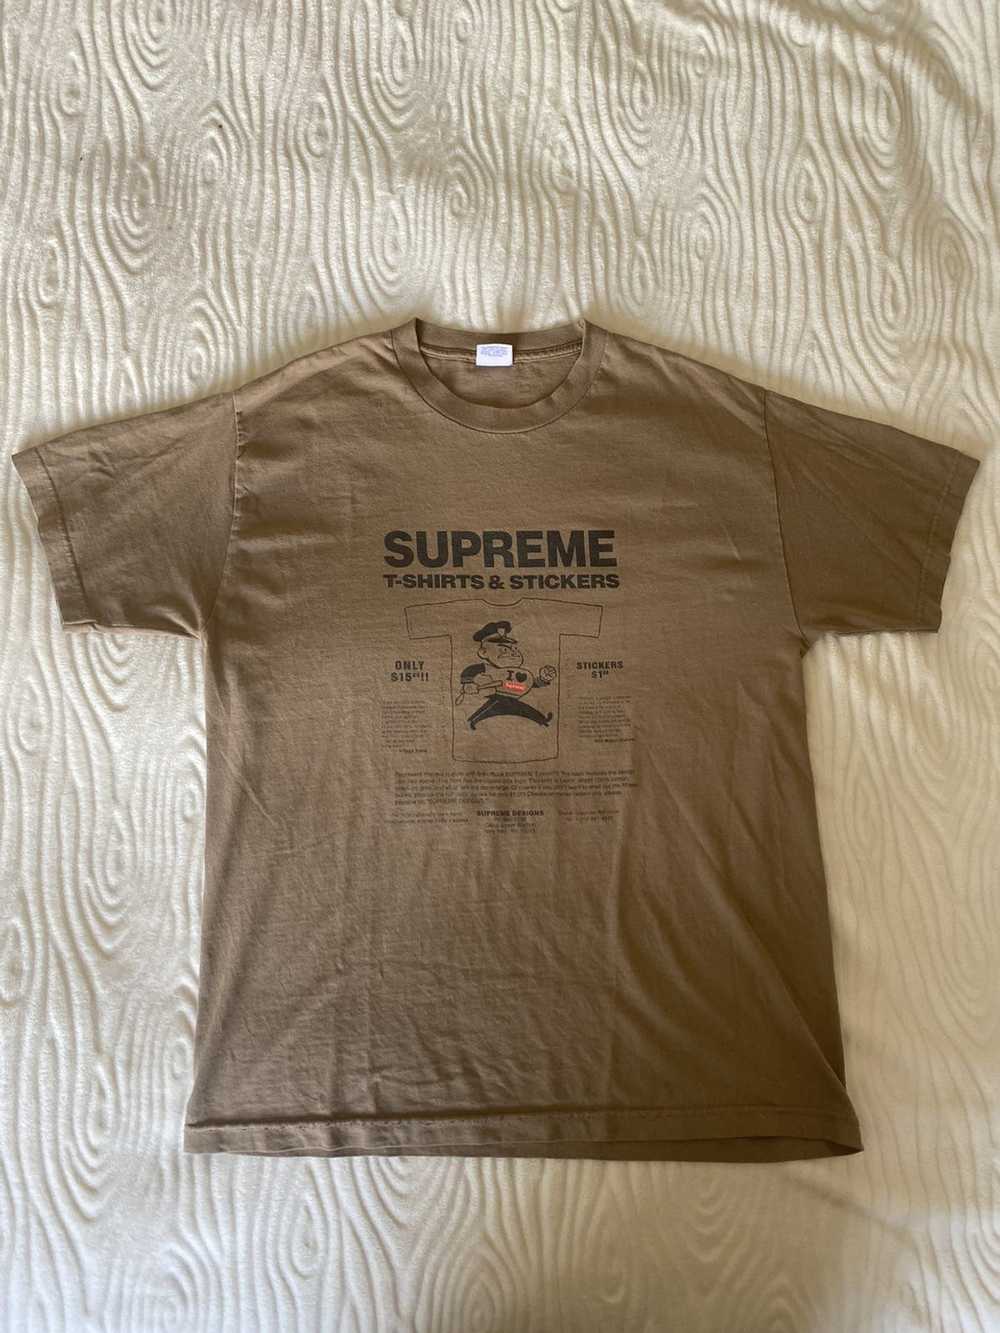 Supreme Supreme T Shirts and Stickers Tee - image 2